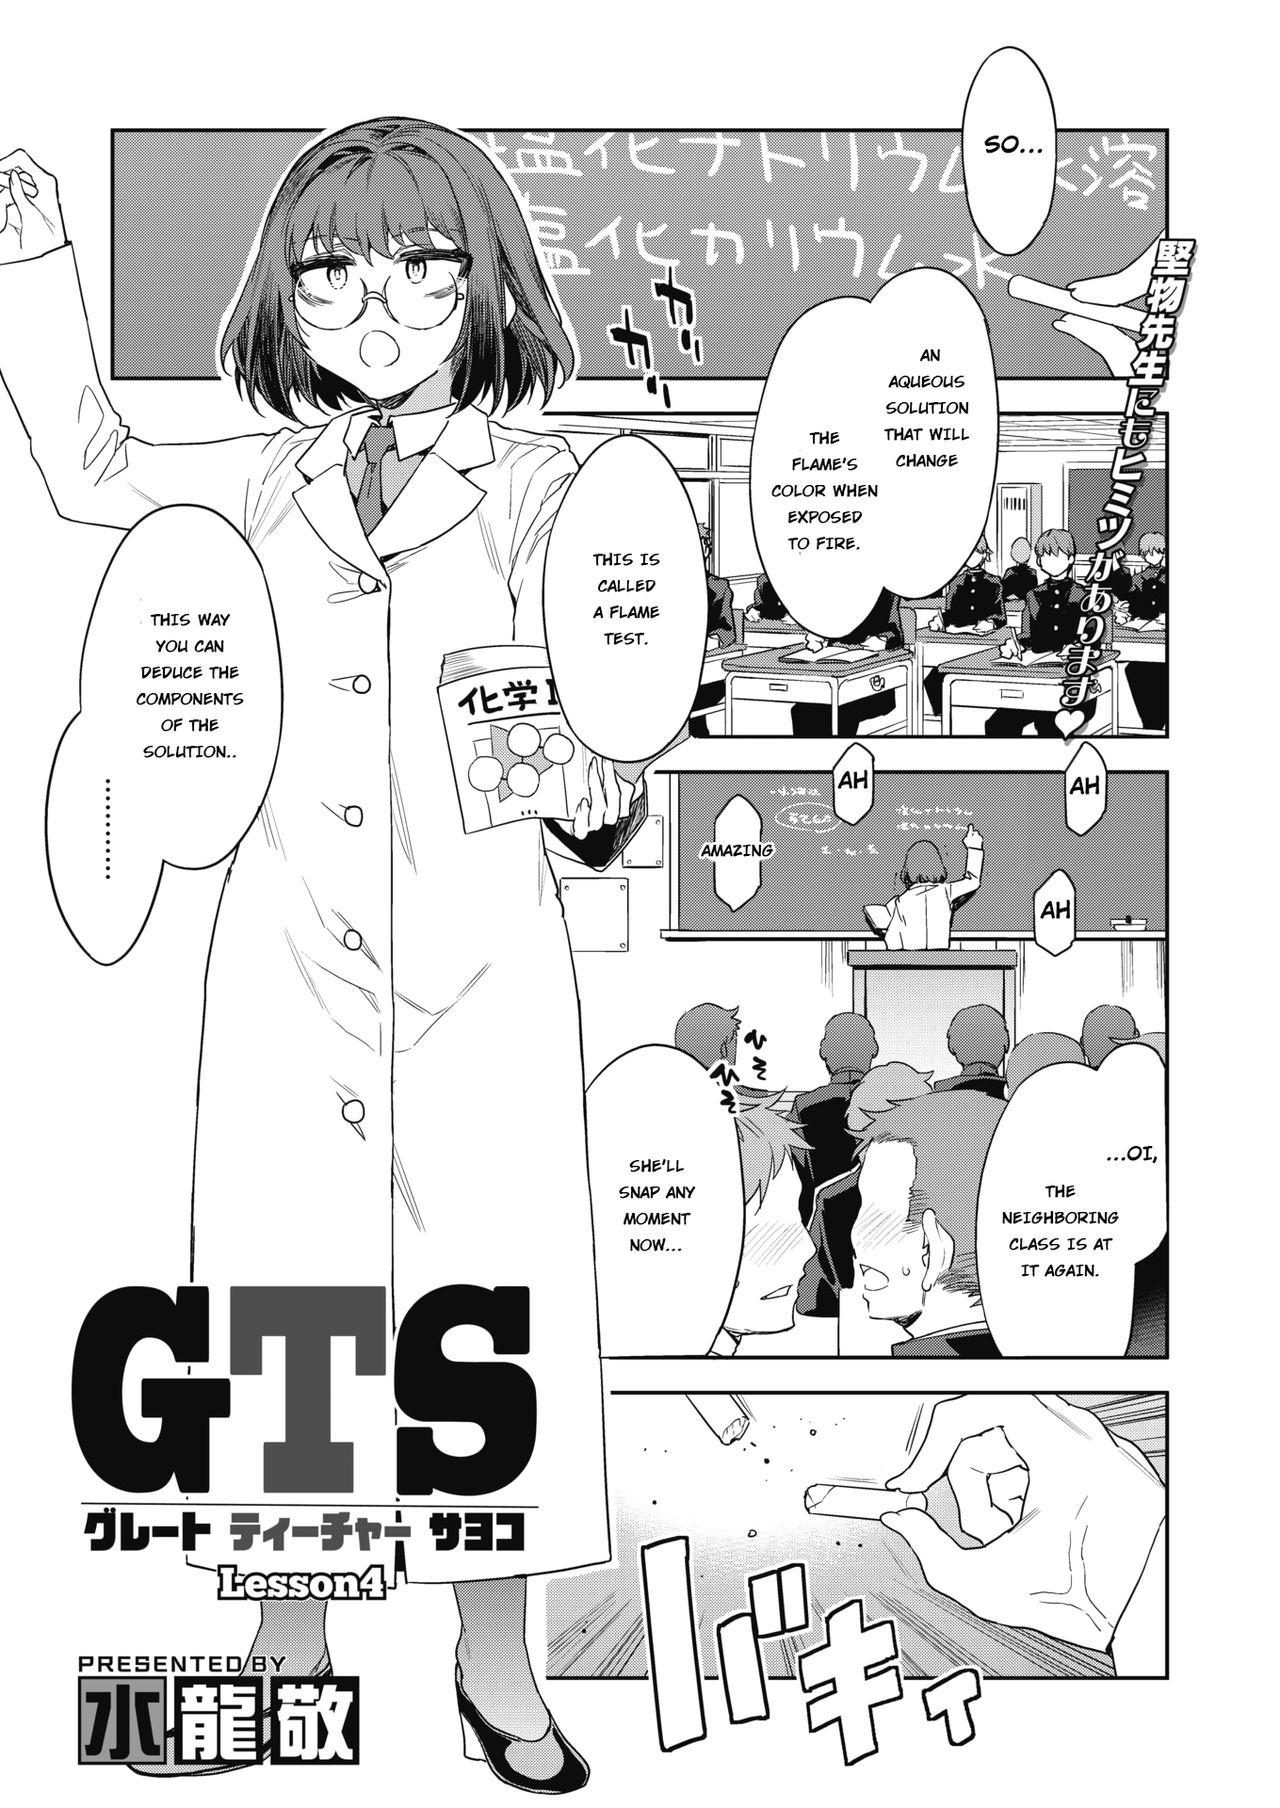 GTS Great Teacher Sayoko Lesson 4 0